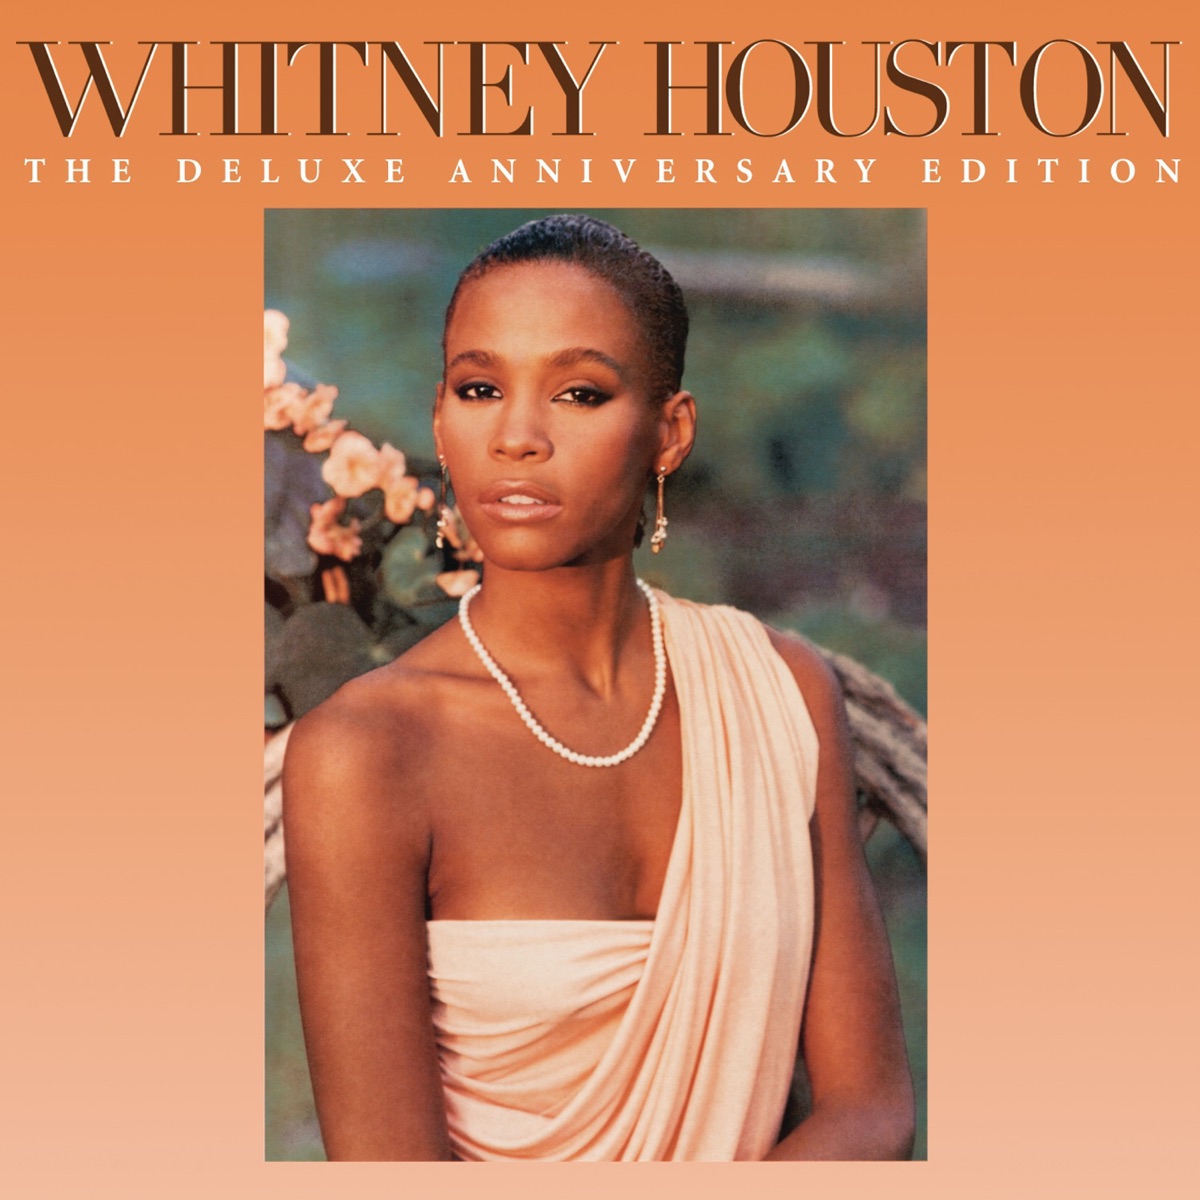 Whitney Houston Deluxe Anniversary Edition) by Whitney Houston on Apple